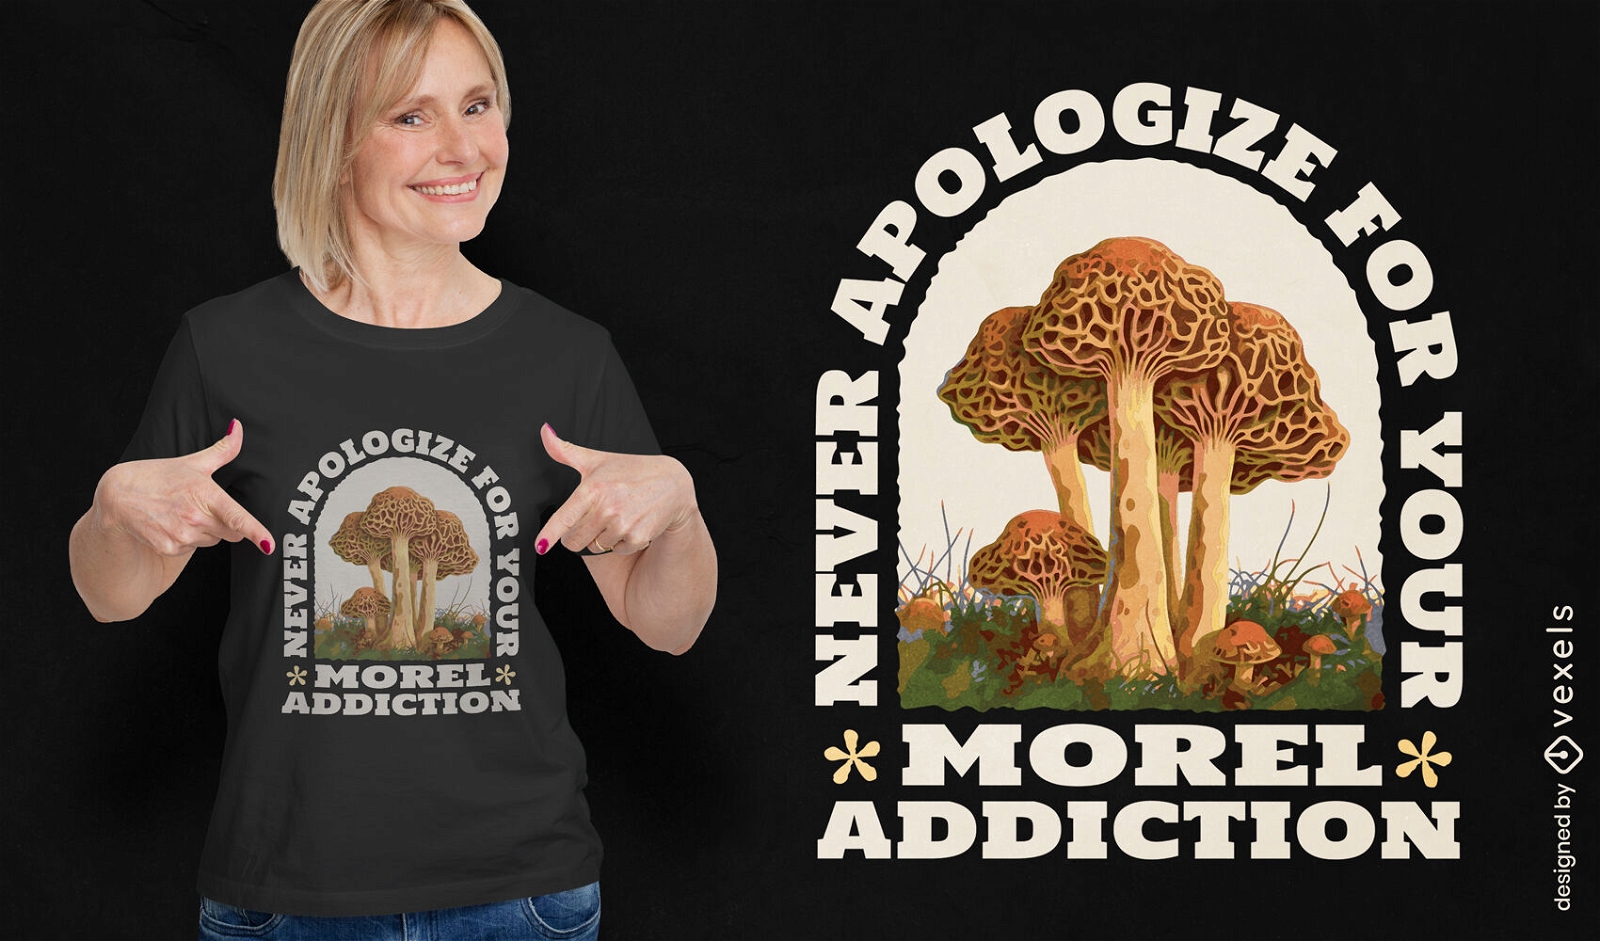 Realistic mushroom t-shirt design